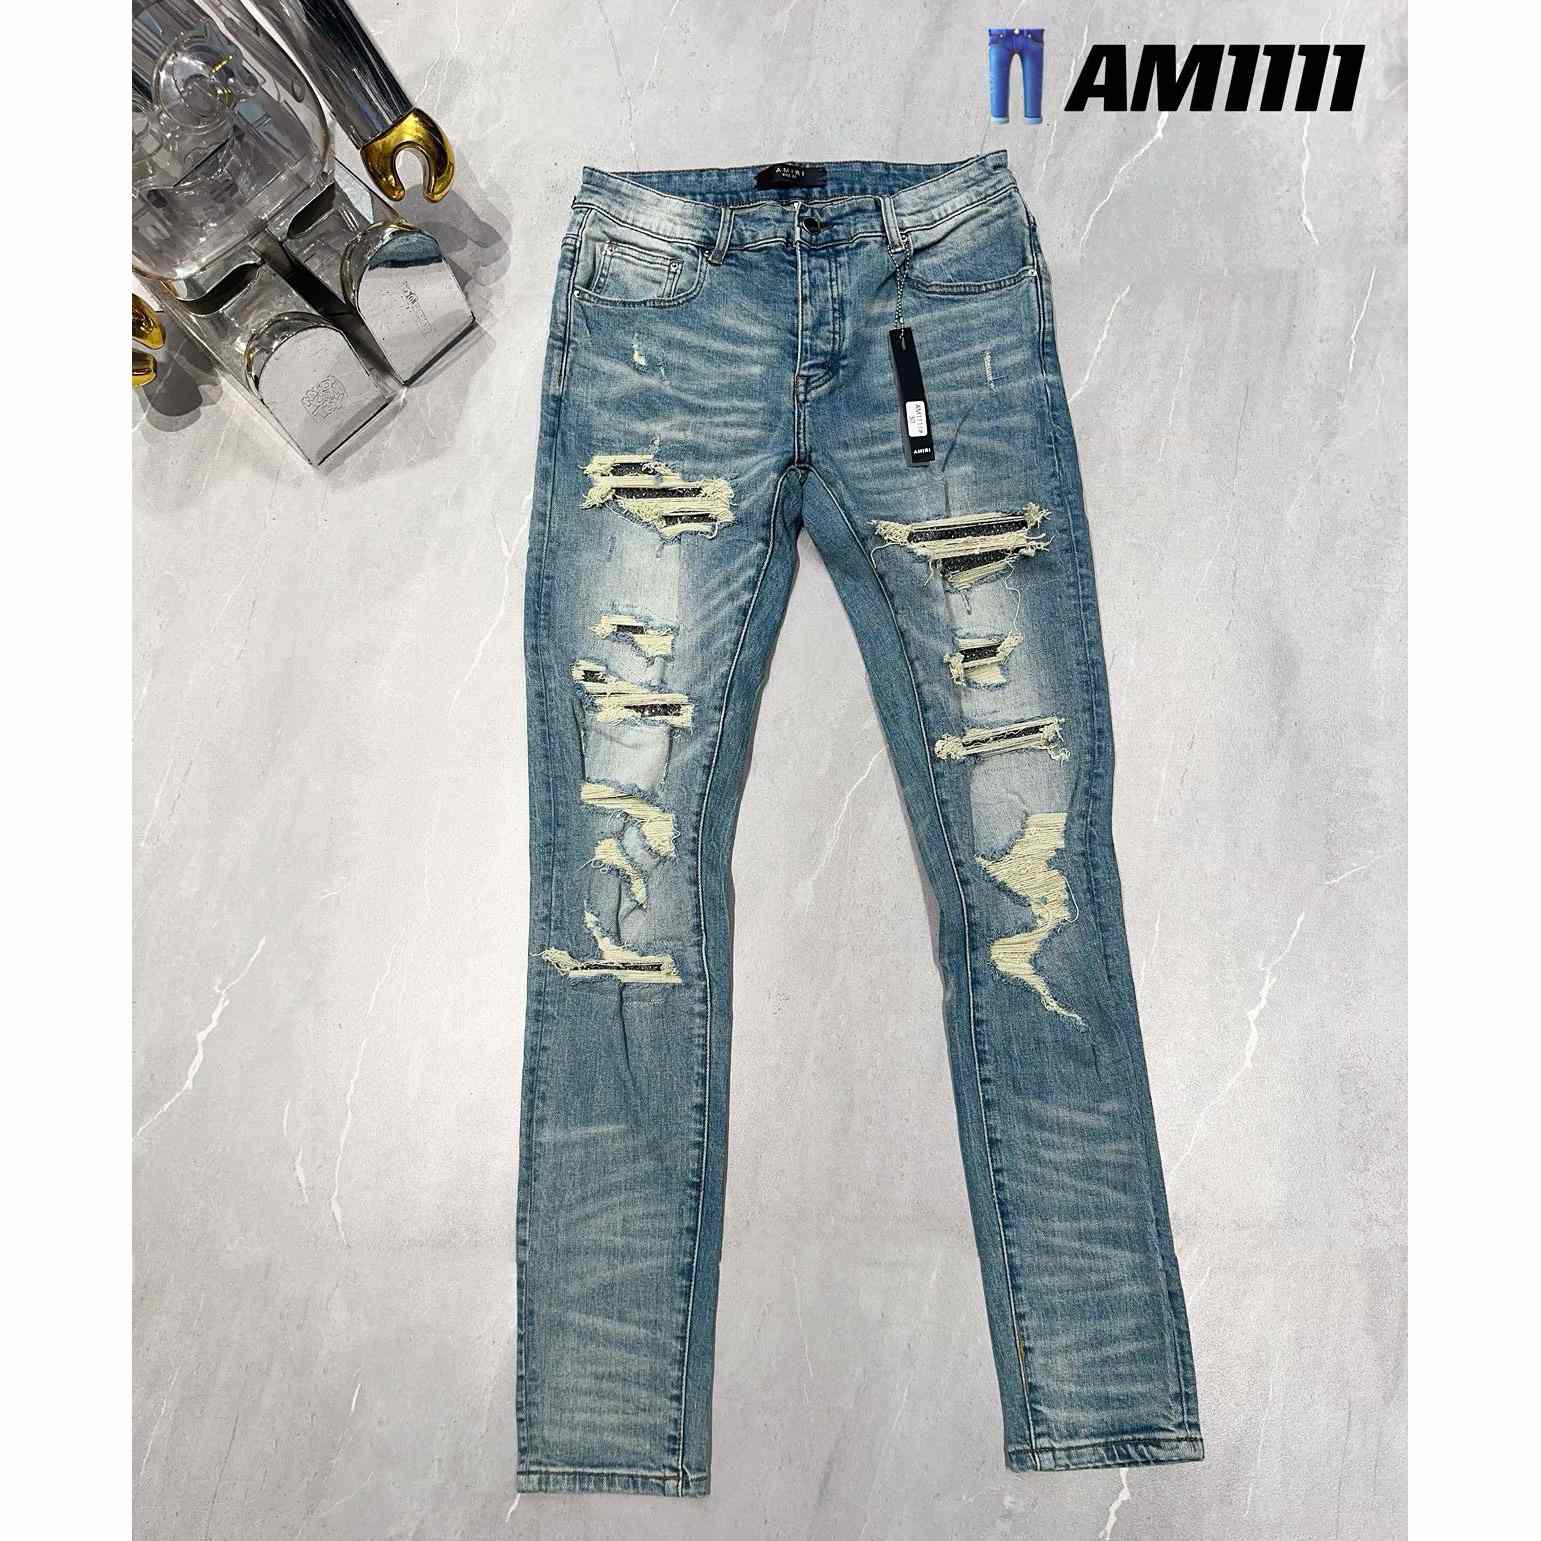 Amiri Jeans     AM1111 - everydesigner